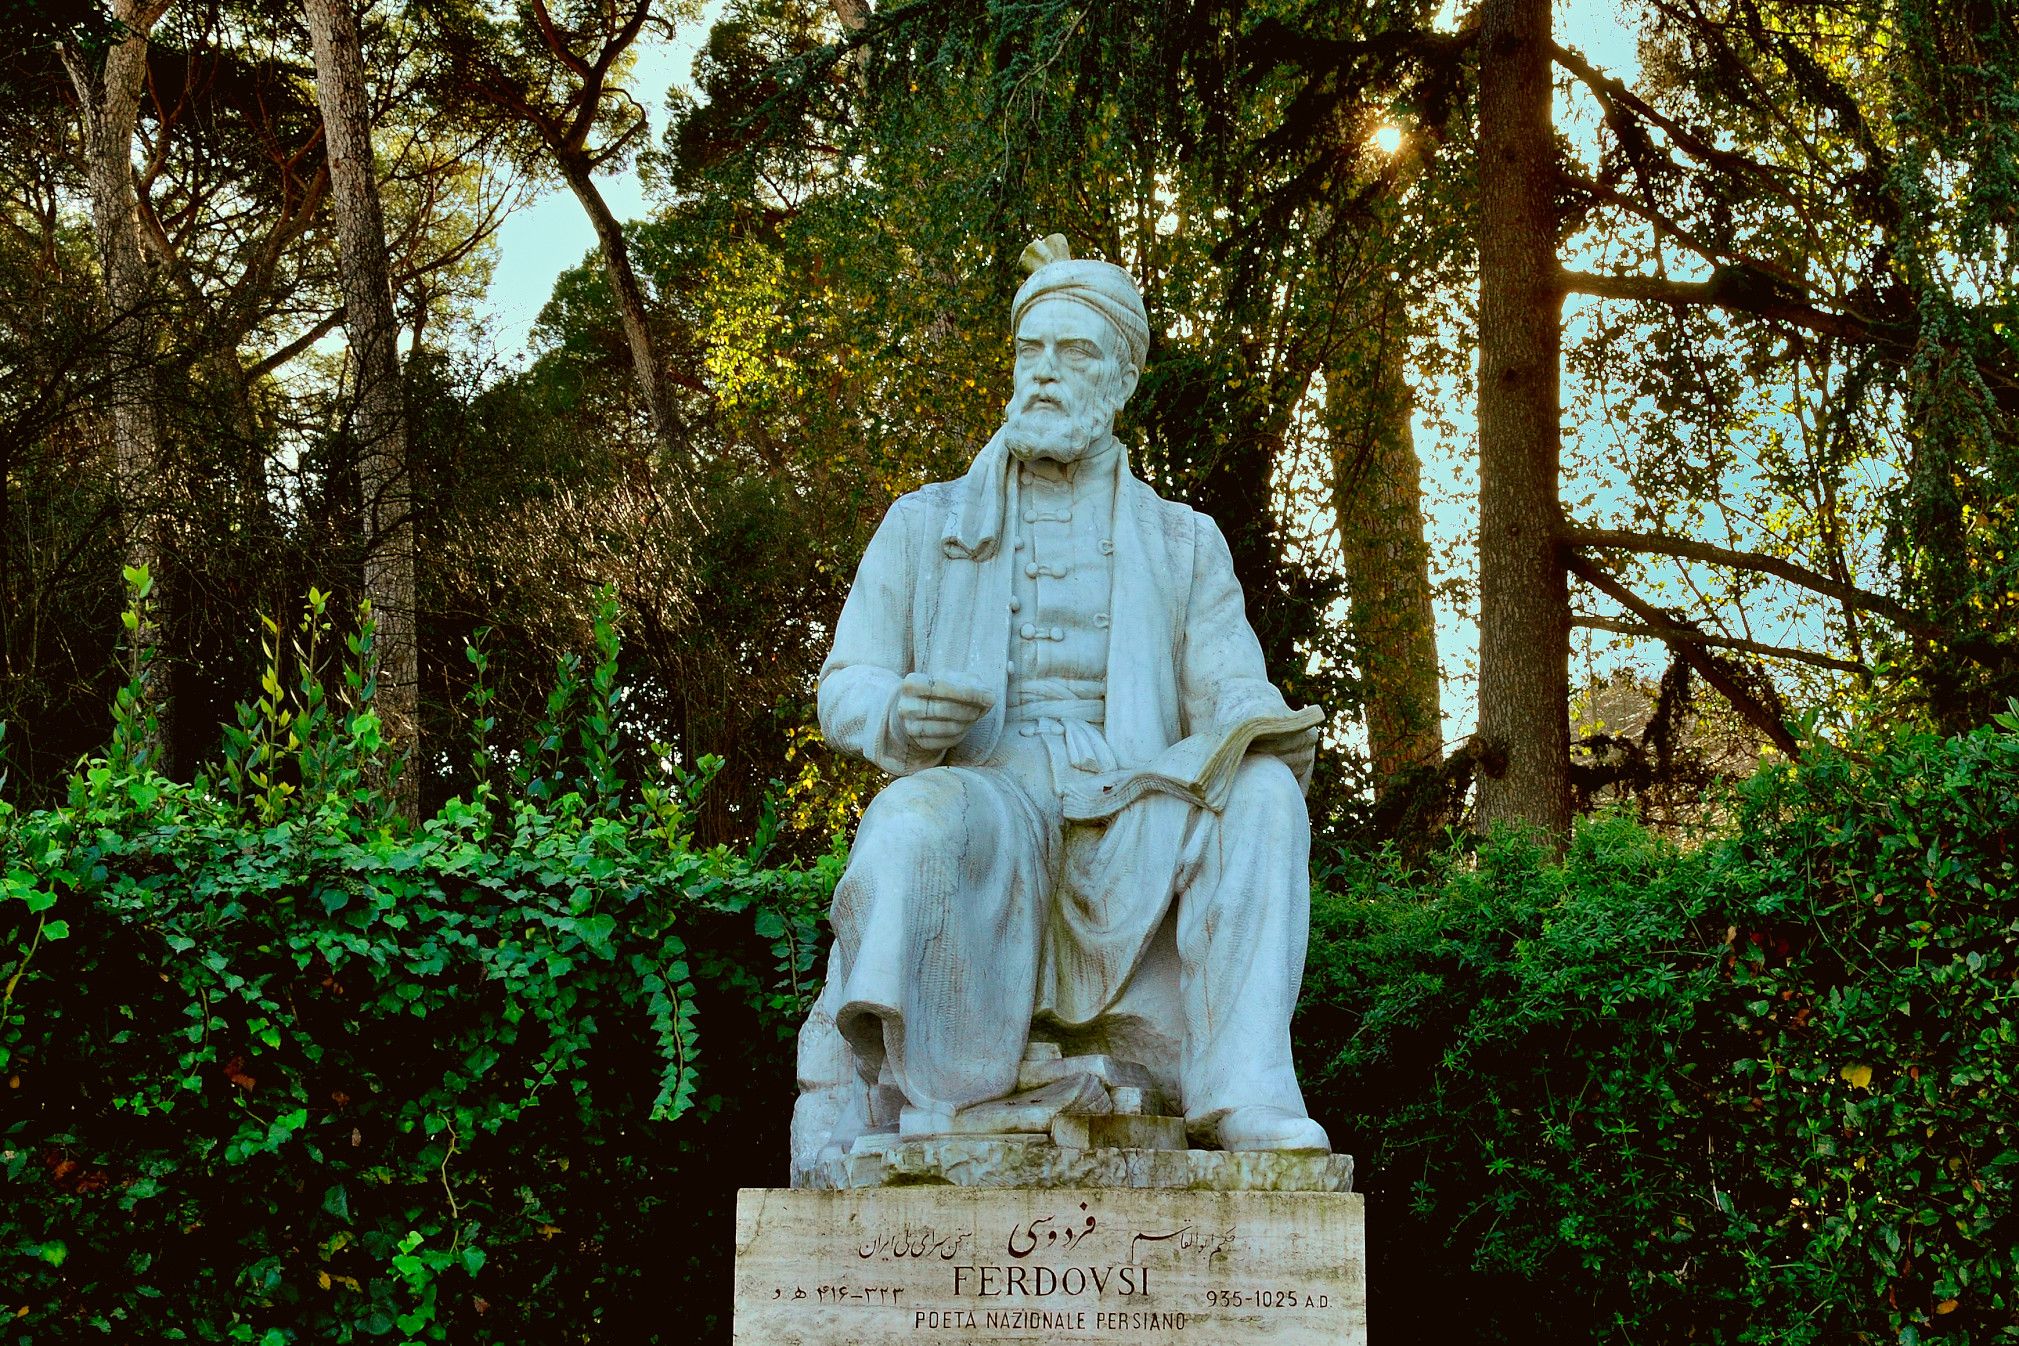 Statue of Ferdowsi (Iranian Poet ***-****), Piazzale Ferdowsi, Rome. Italy. History of literature, Books of kings, Statue